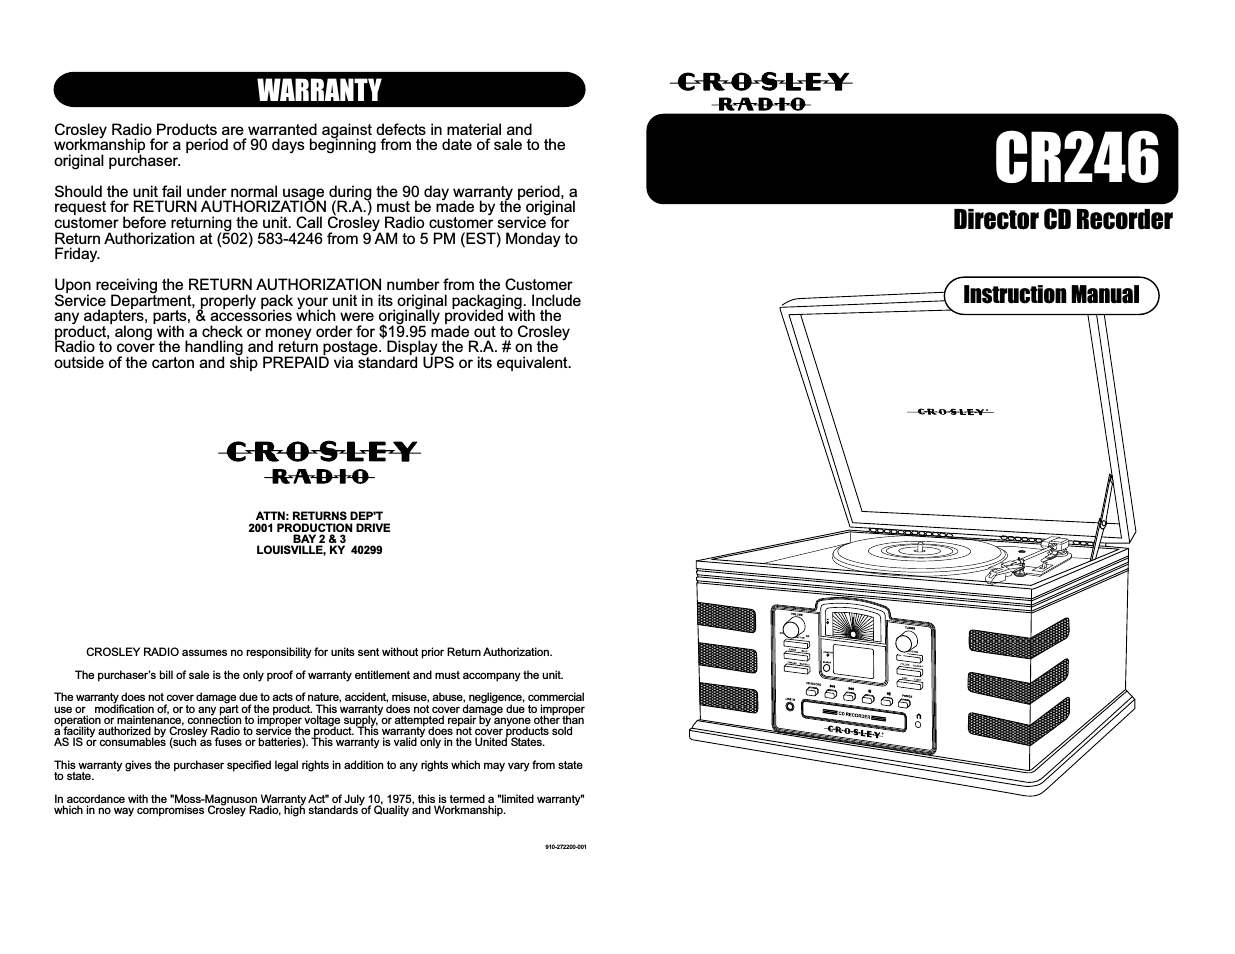 Crosley Director cr246